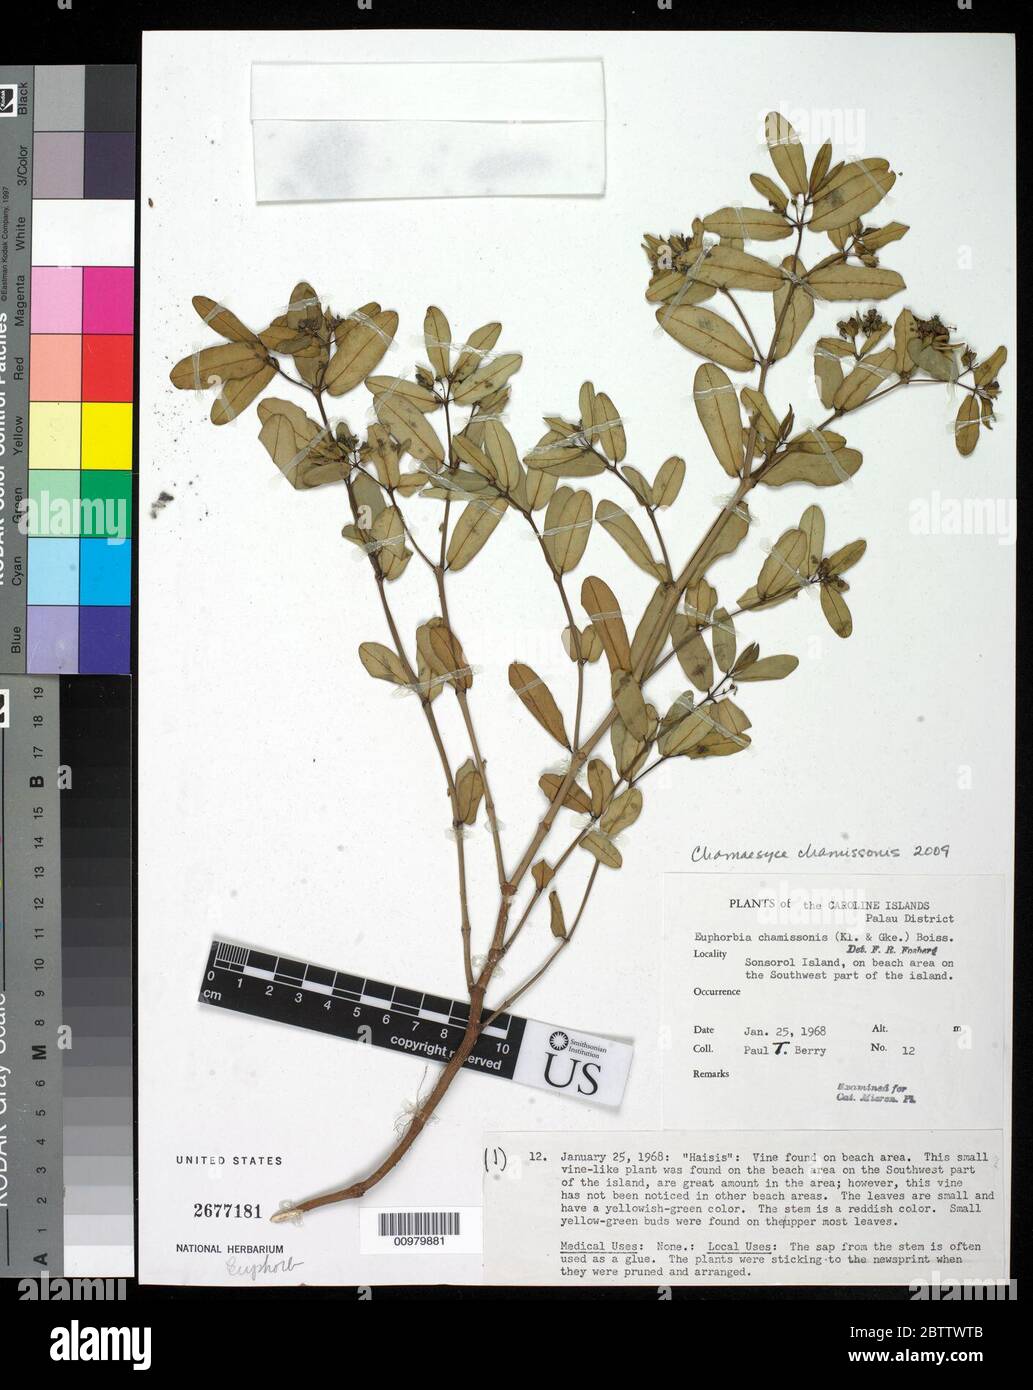 Euphorbia chamissonis Klotzsch ex Klotzsch Garcke Boiss. Stock Photo